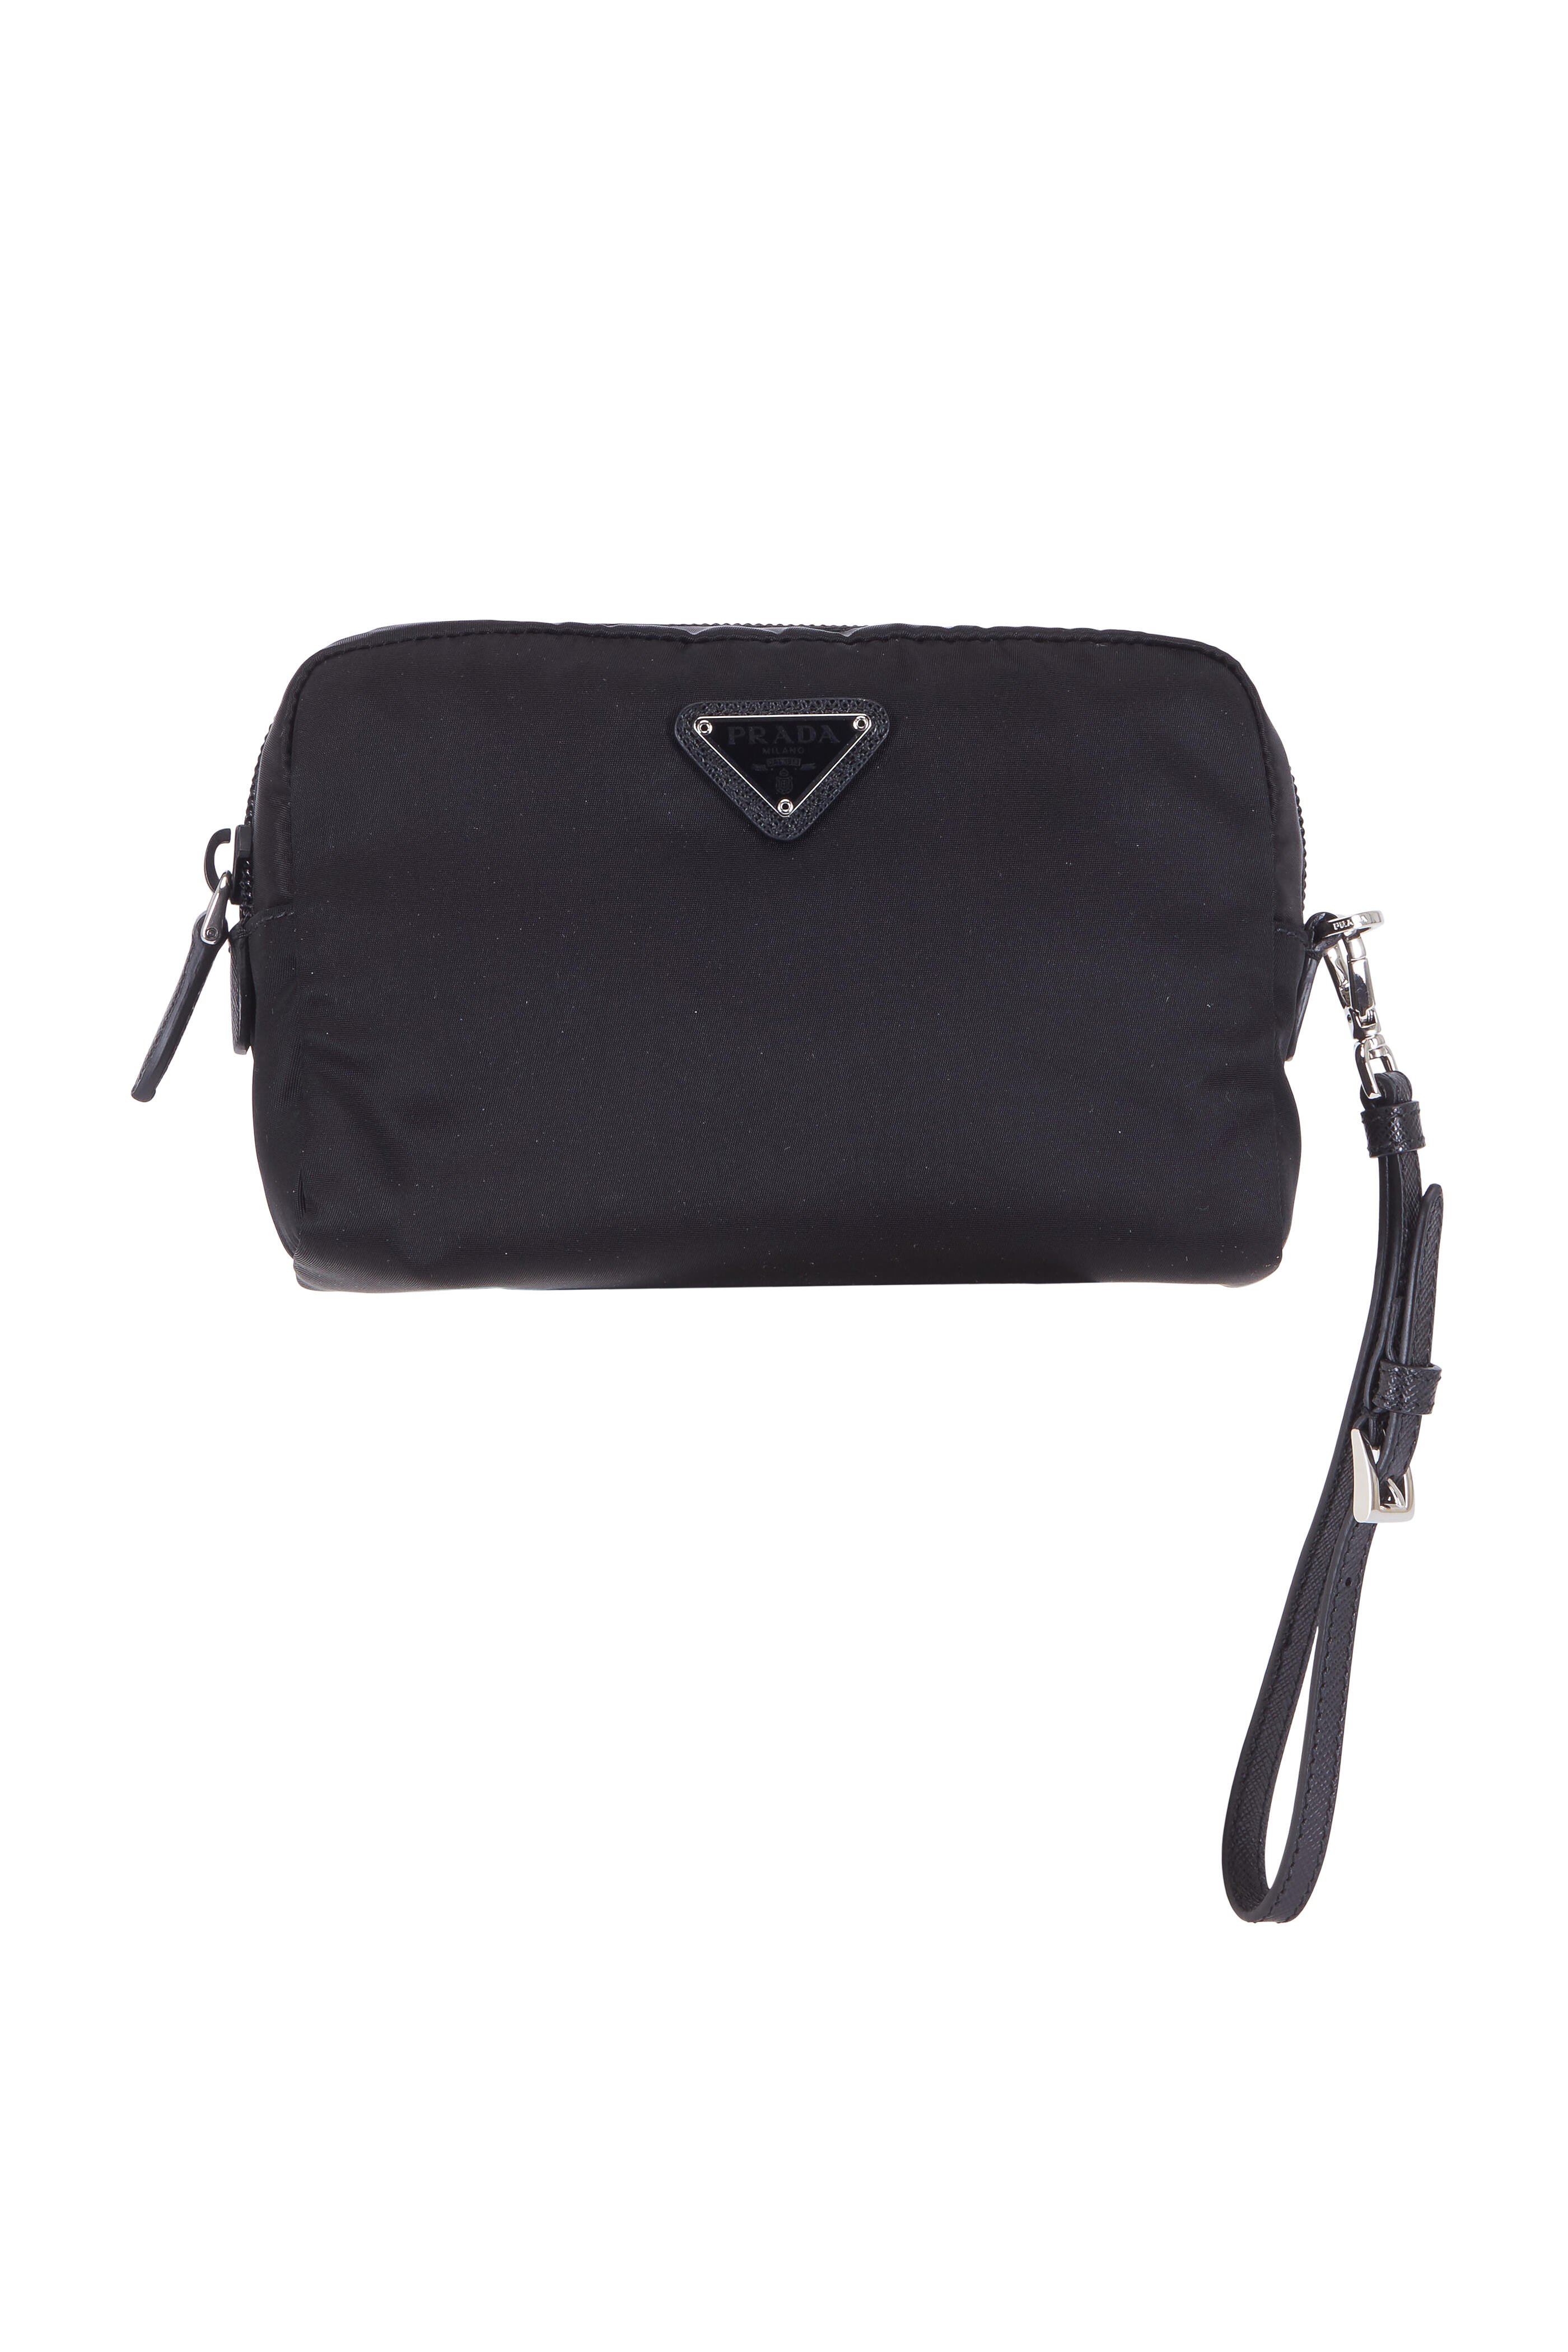 Mini Nylon Pouch Bag | Small Cosmetic Bag